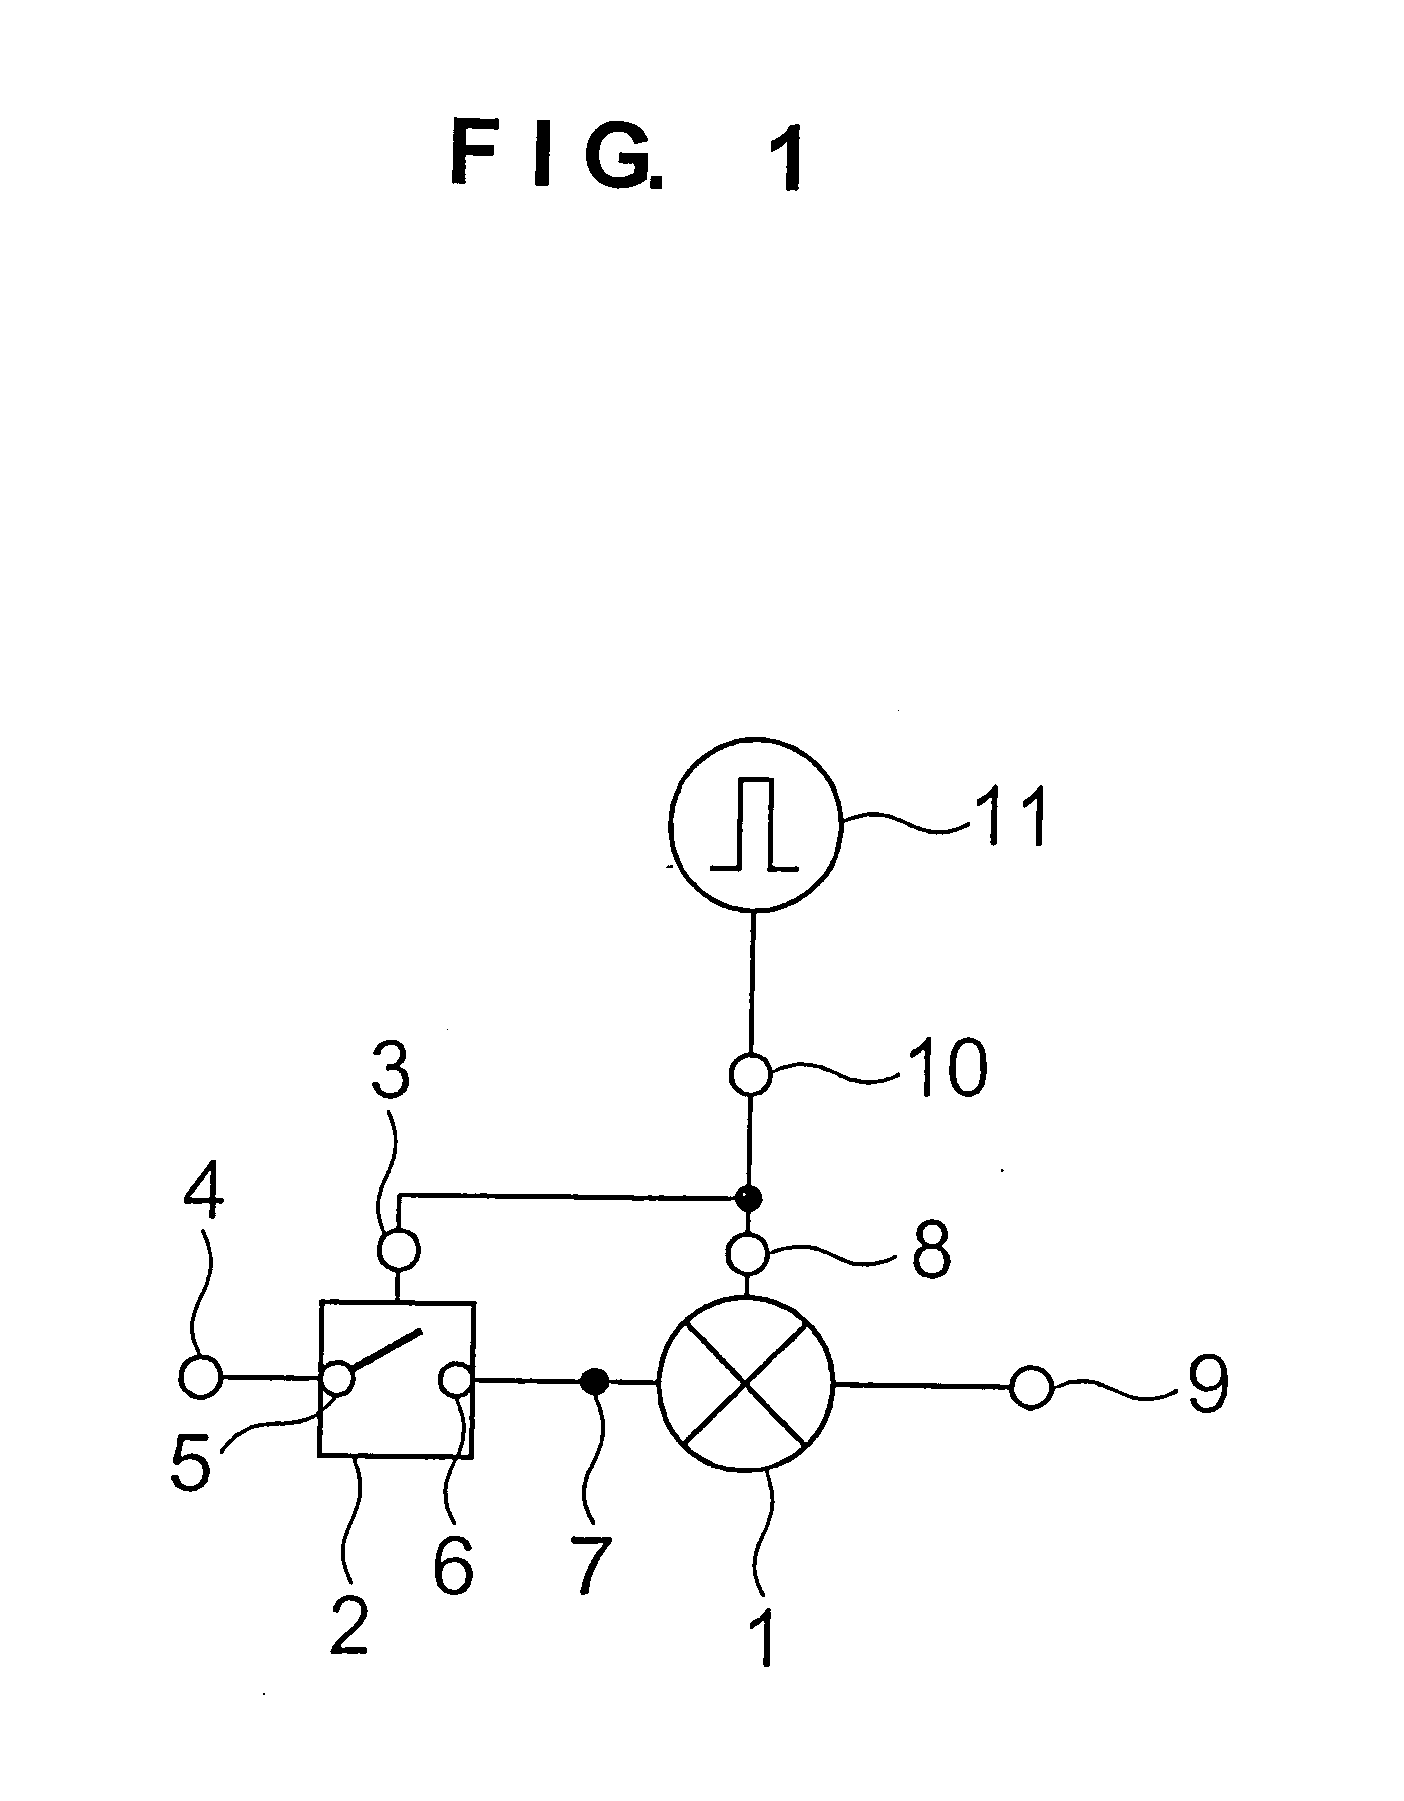 Pulse modulation circuit